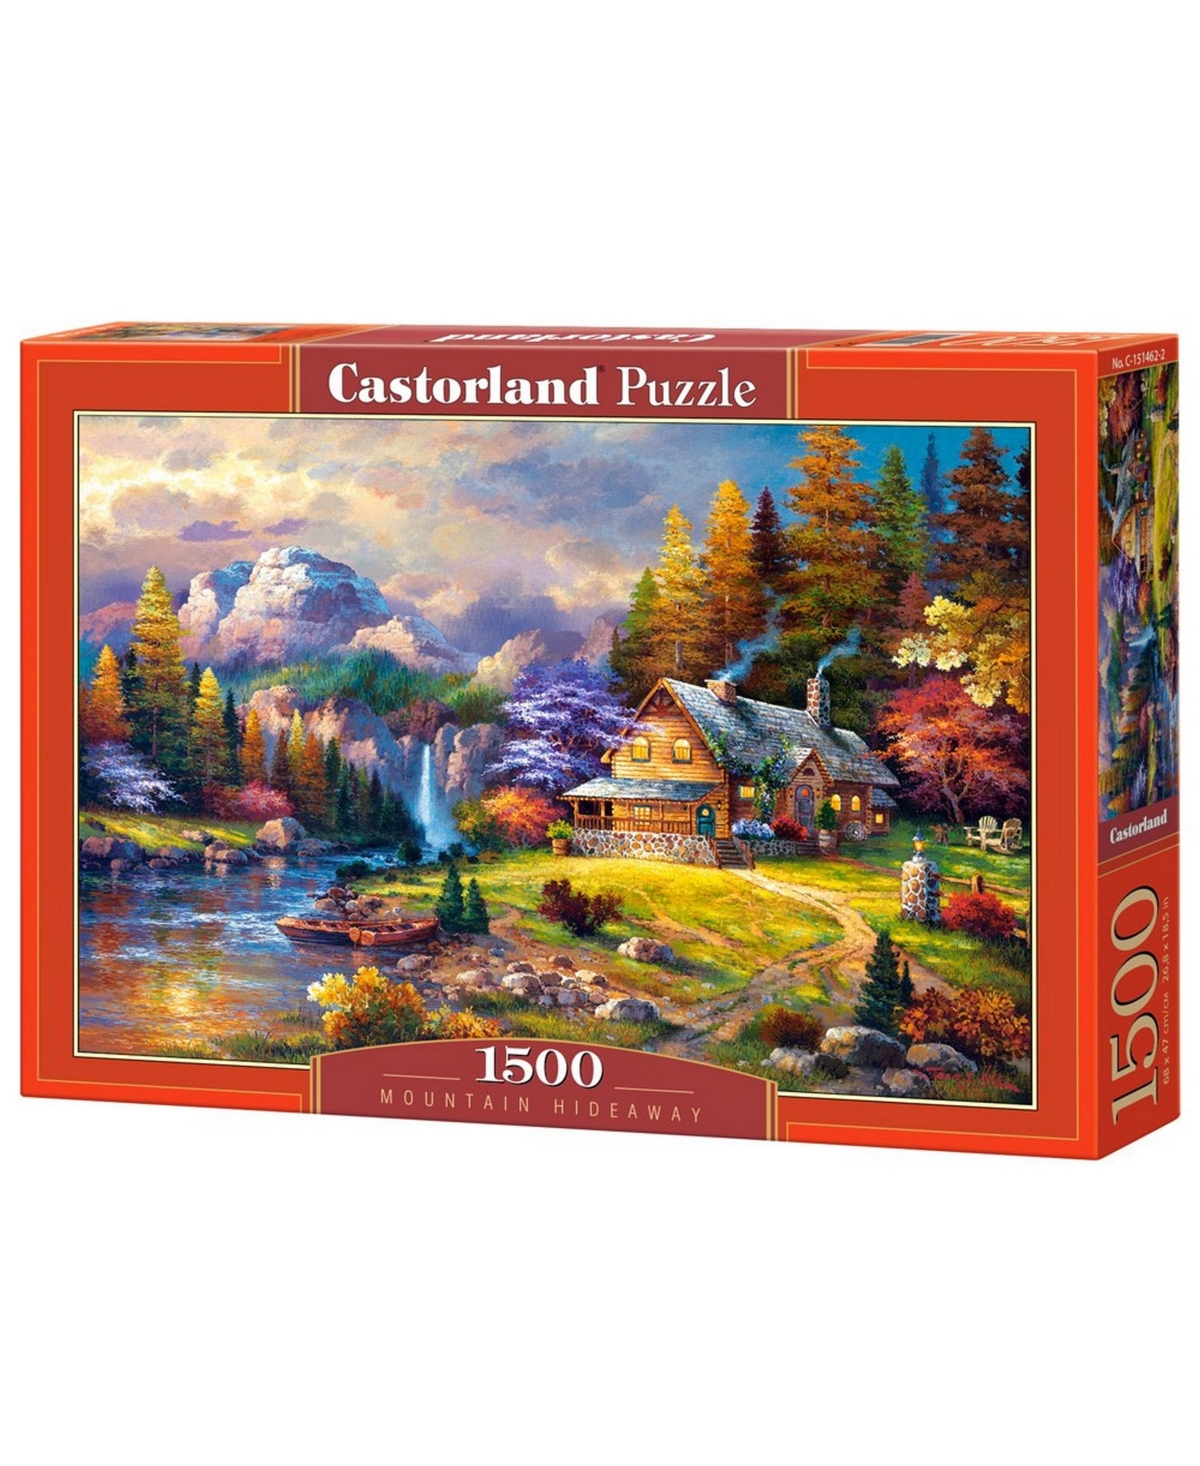 Castorland Mountain Hideaway Jigsaw Puzzle Set, 1500 Piece In Multicolor